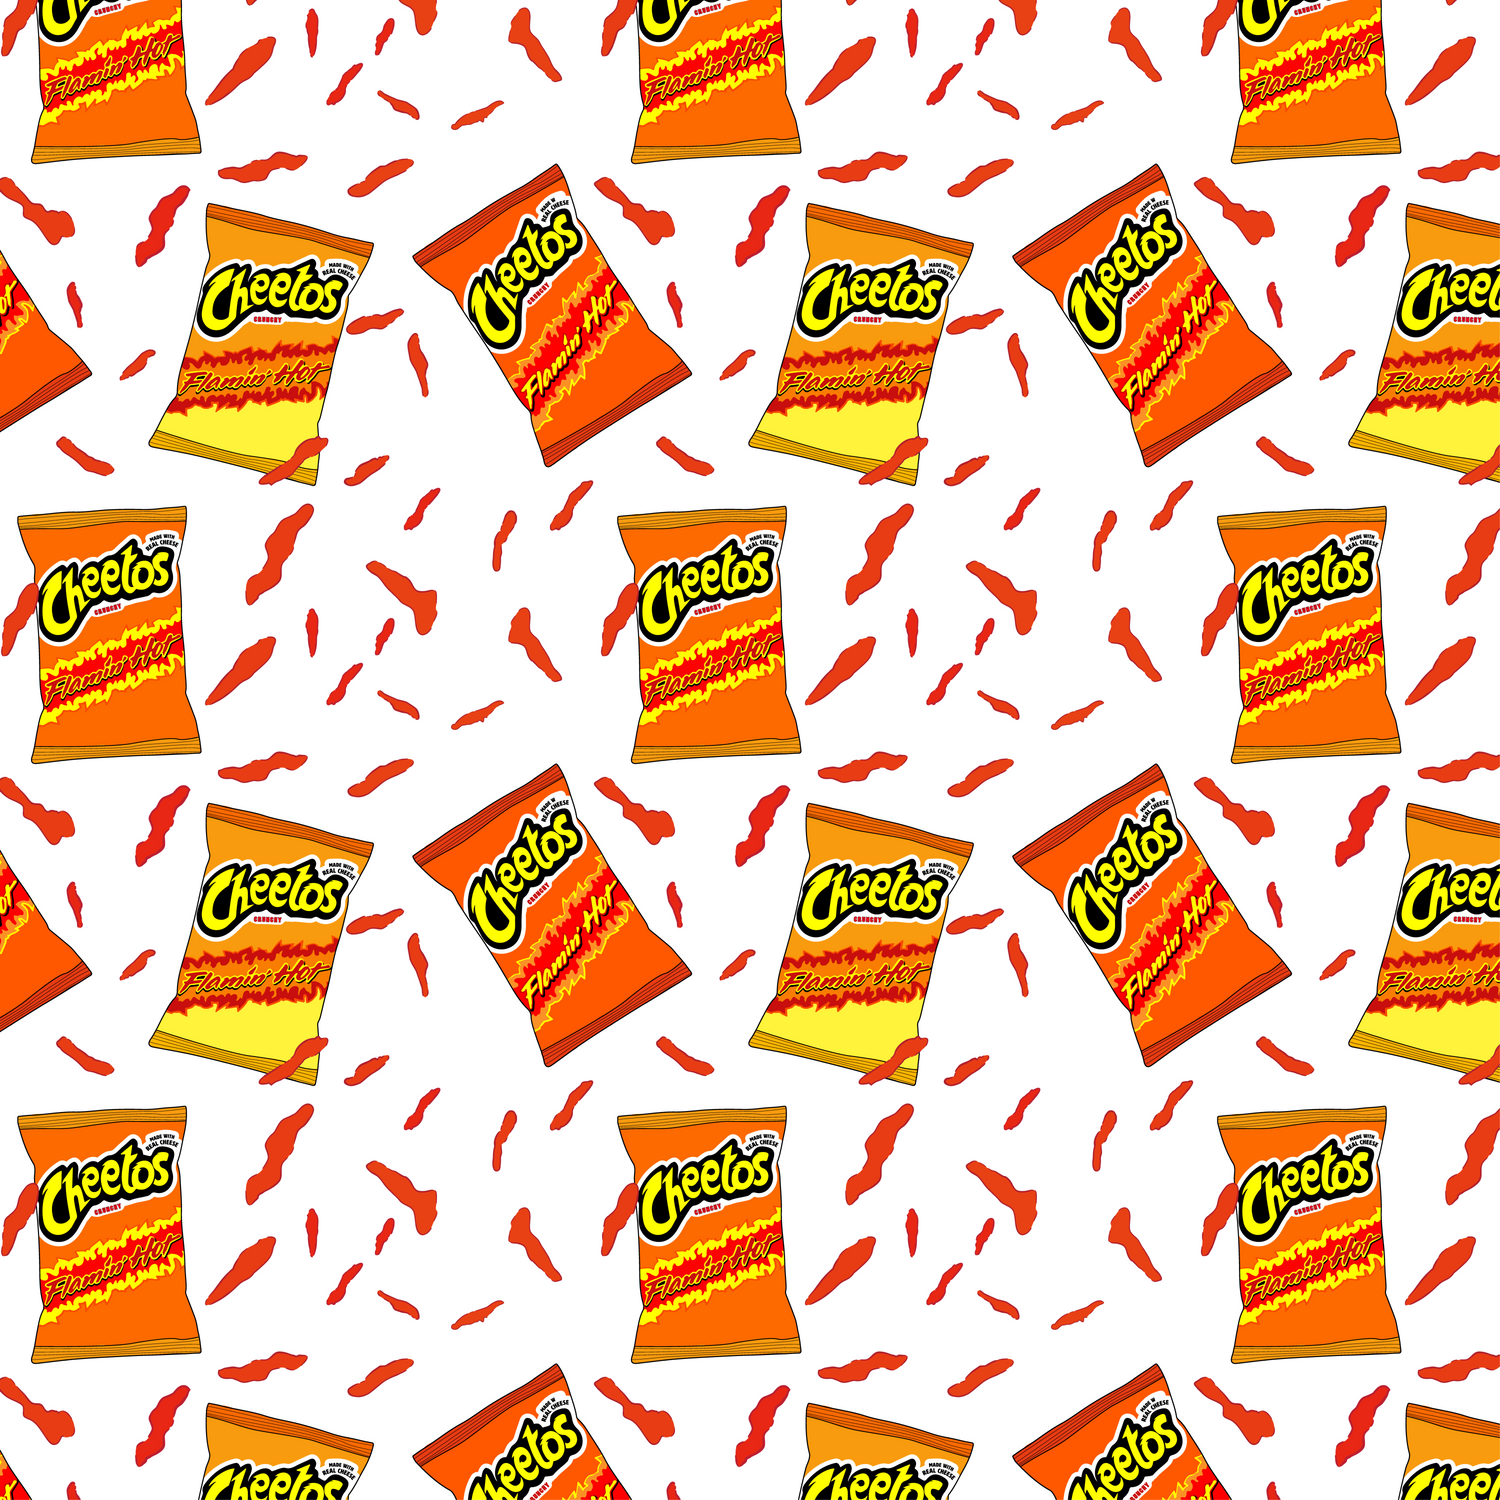 Hot Cheetos Wallpapers.